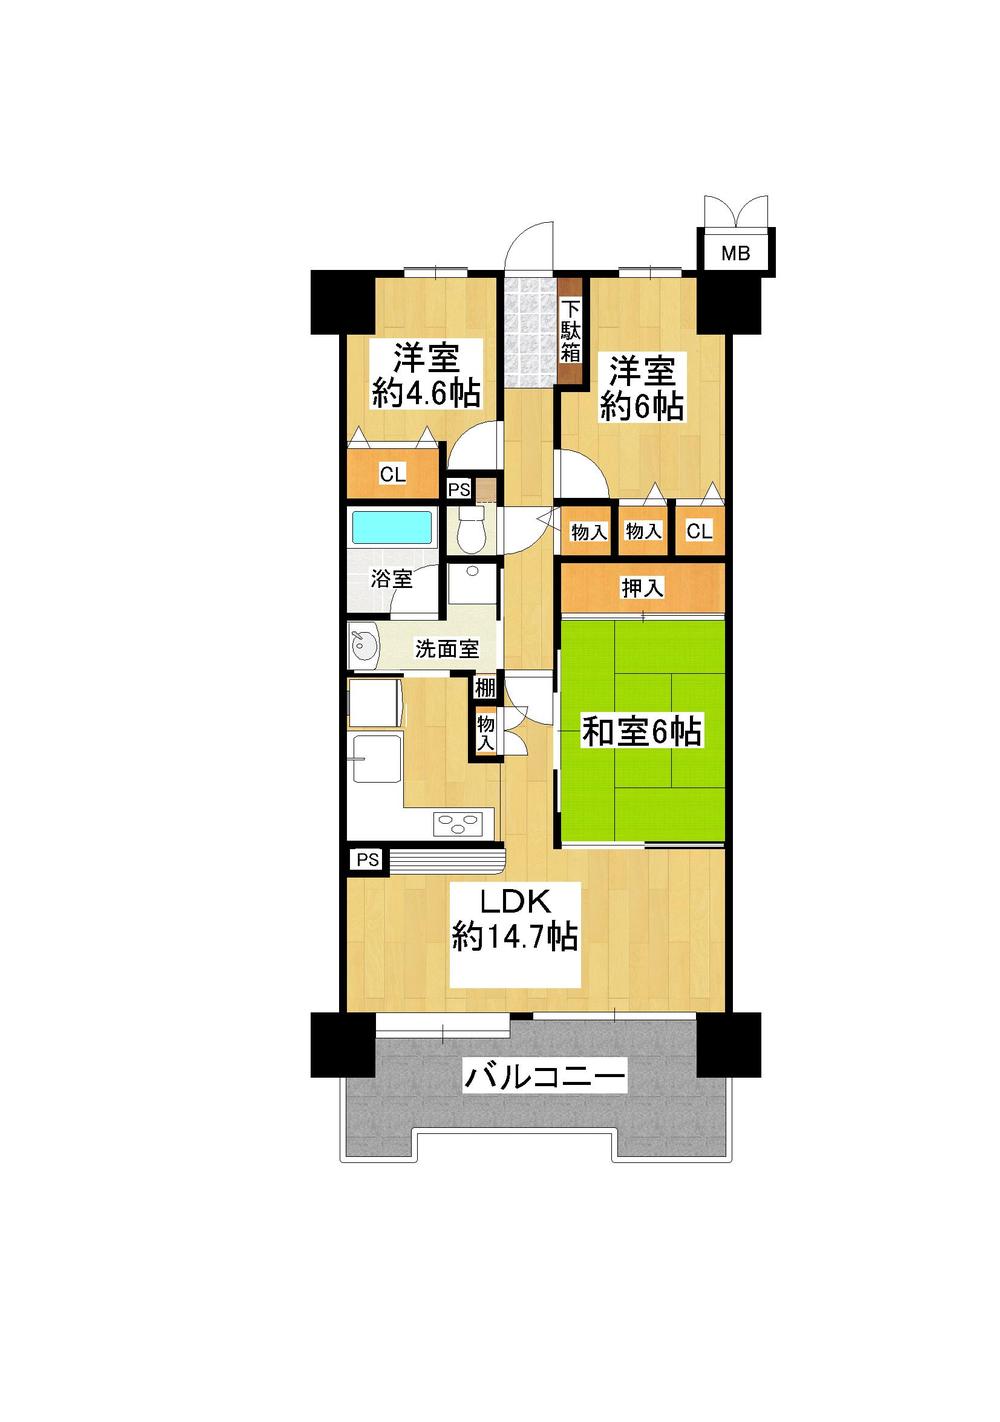 Floor plan. 3LDK, Price 14 million yen, Footprint 70.2 sq m , Balcony area 10.39 sq m